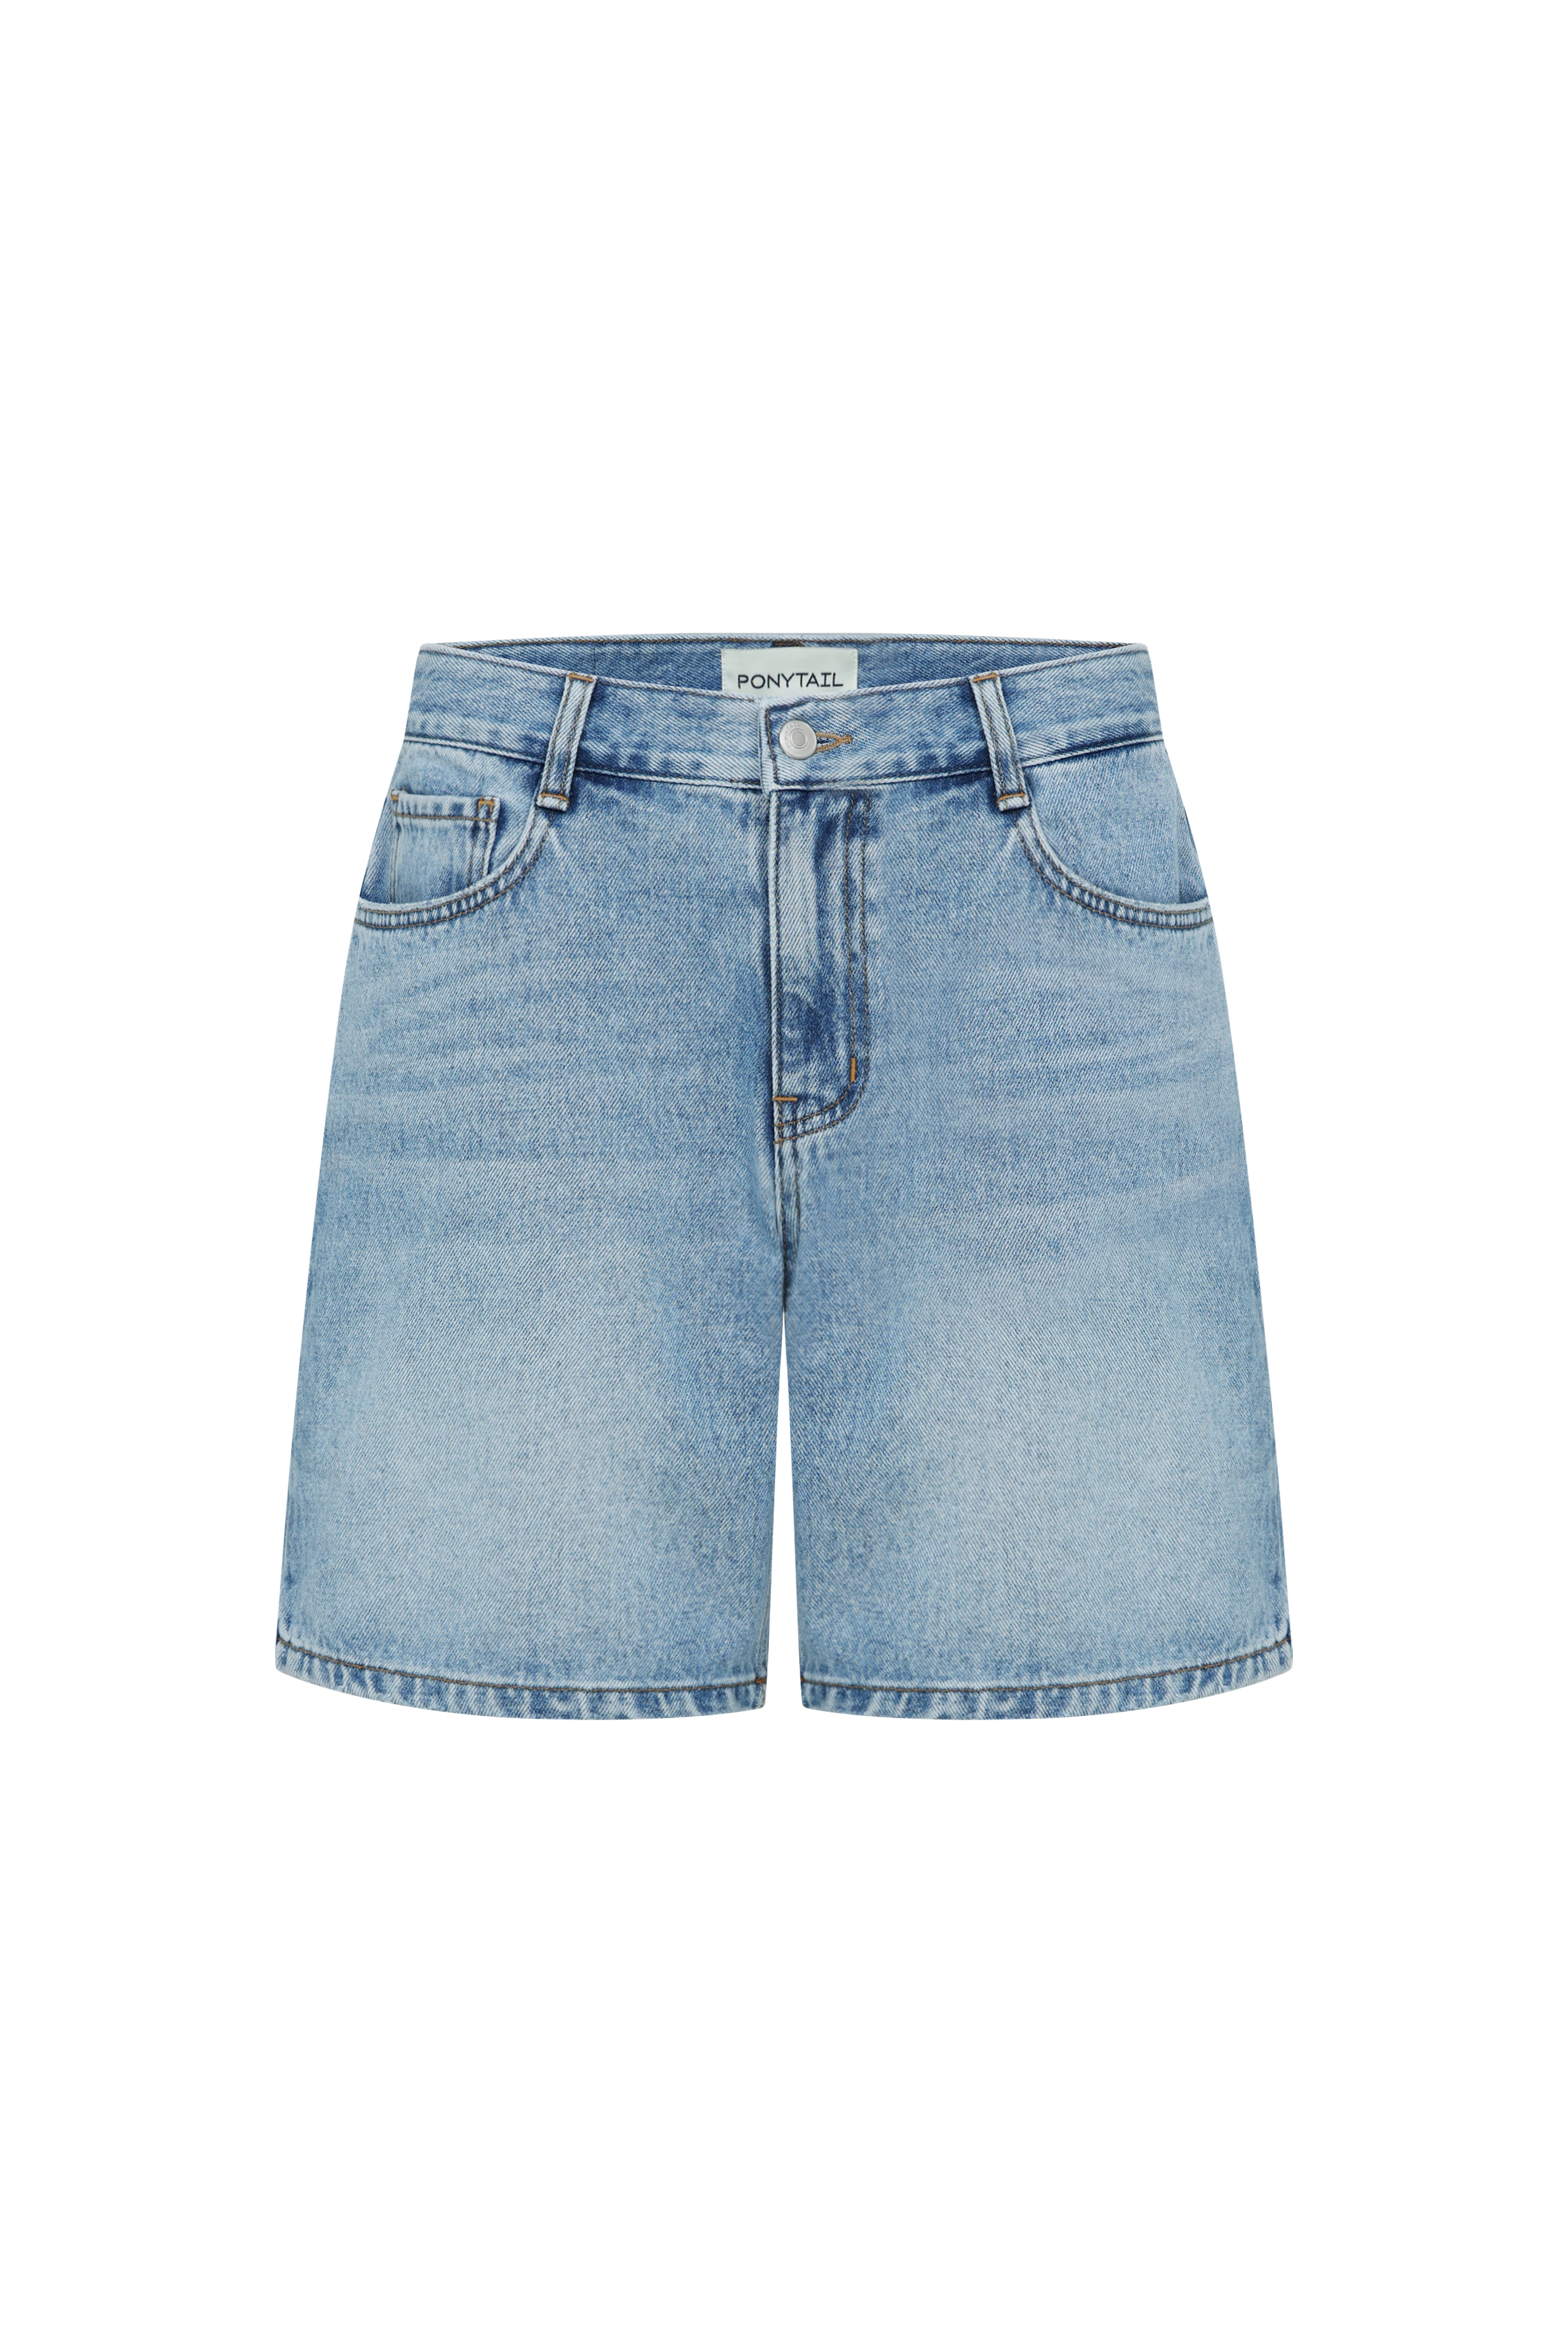 Vintage Washed Bermuda Denim Shorts (Austin Blue) - 포니테일